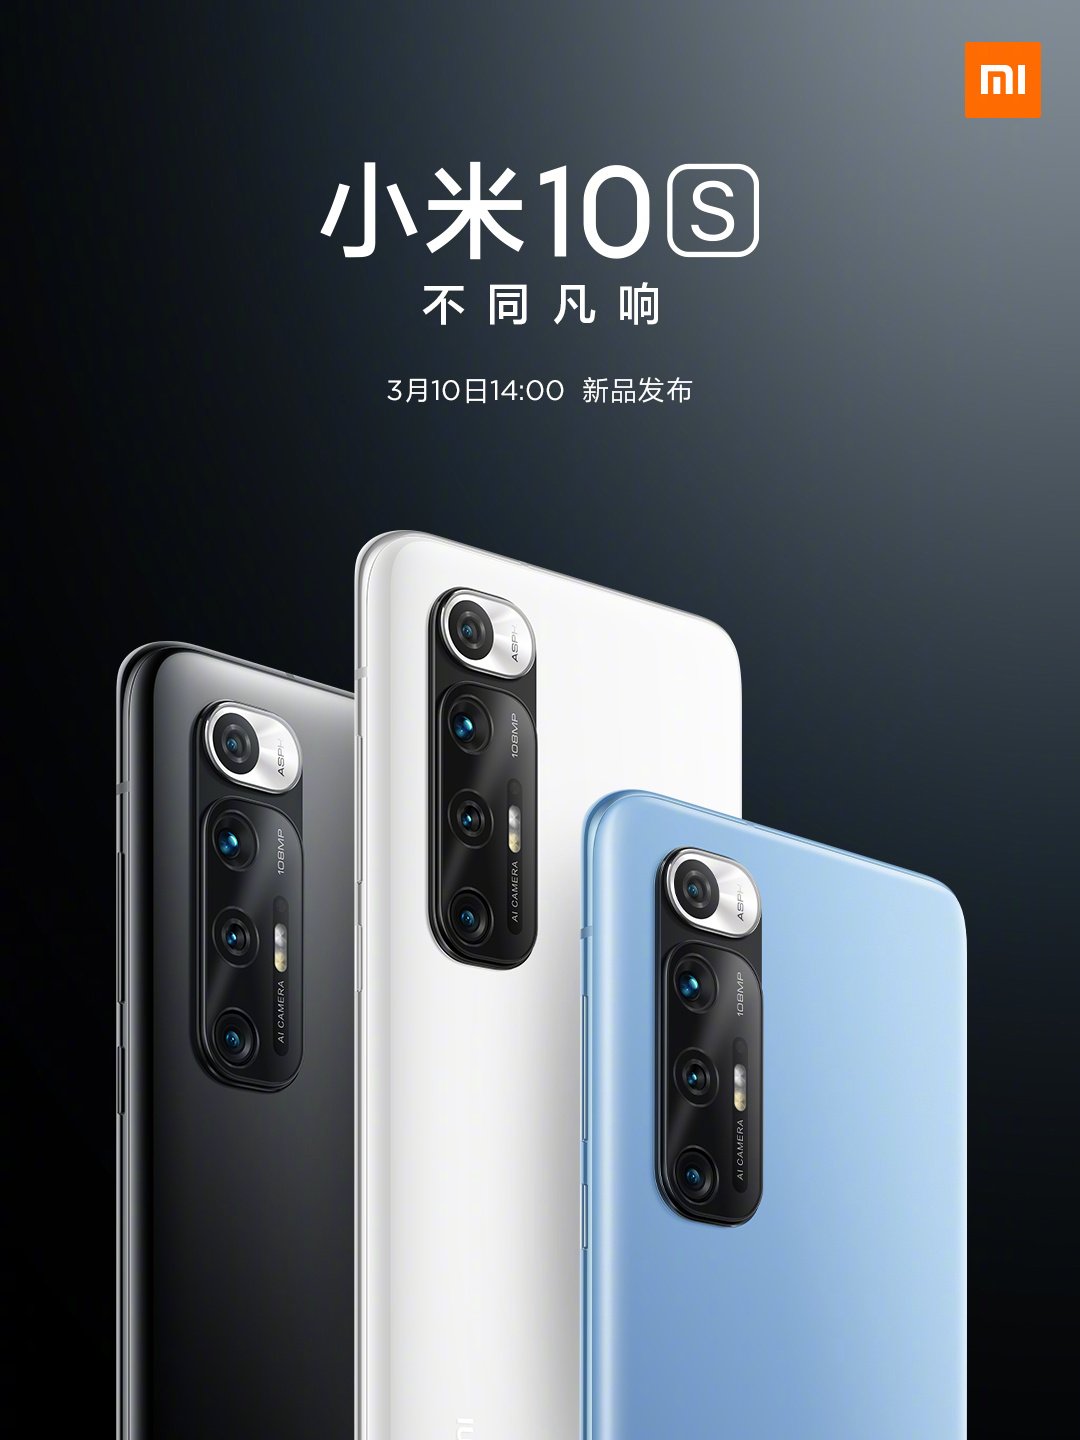 10S Xiaomi mi launch date poster